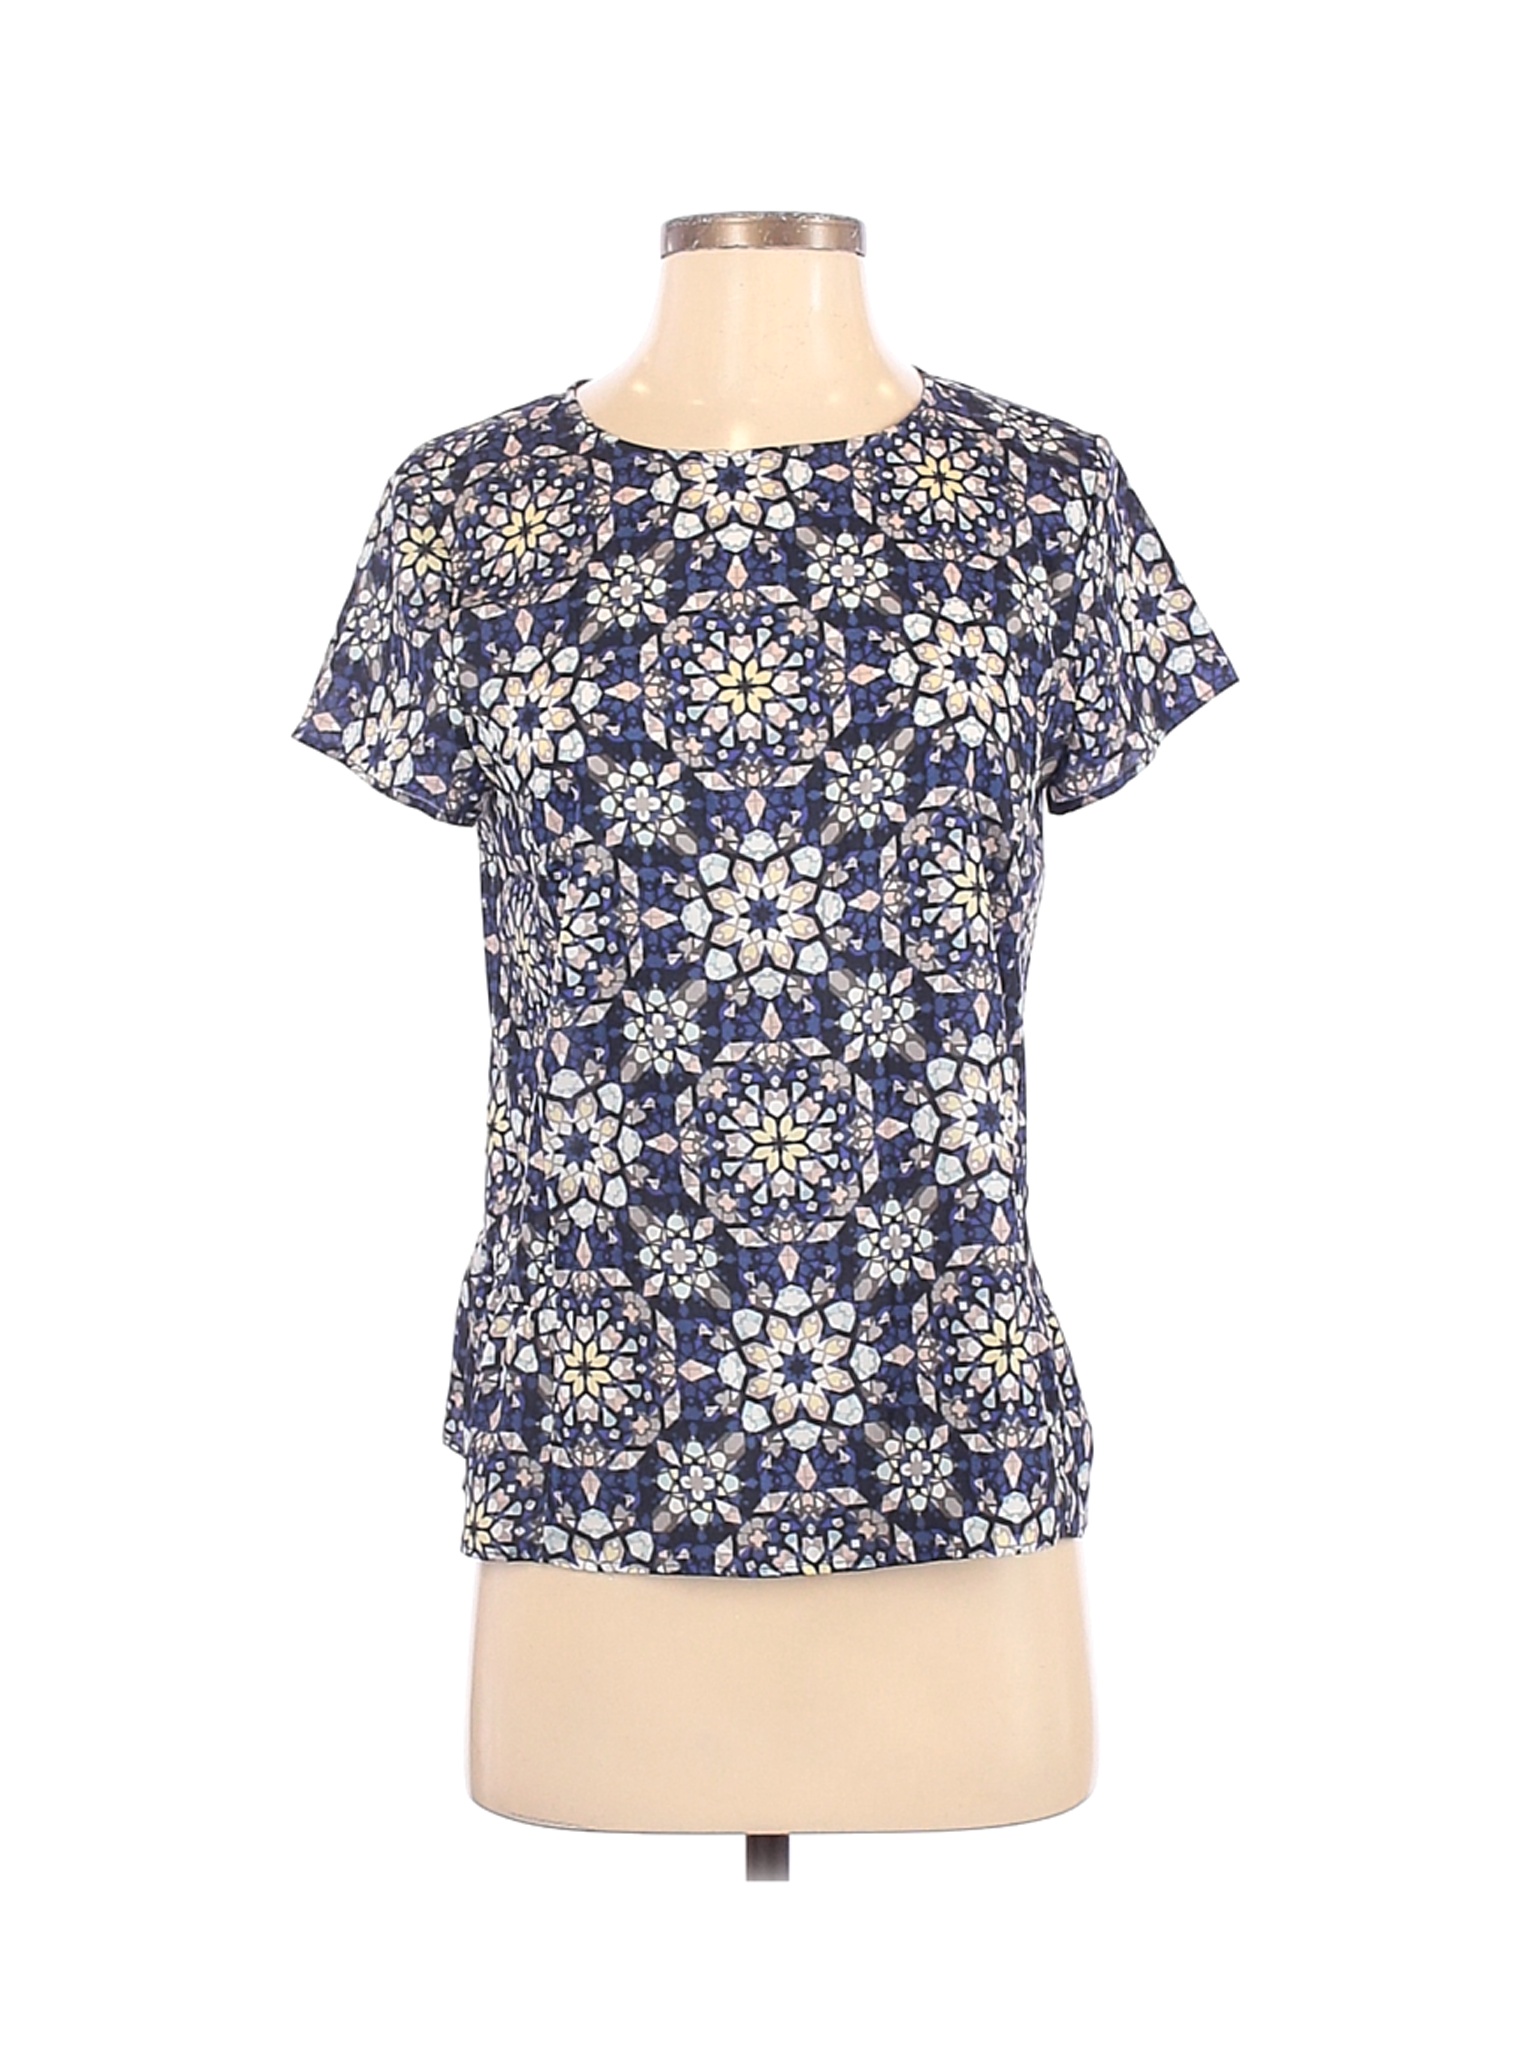 The Limited Women Blue Short Sleeve Blouse S | eBay